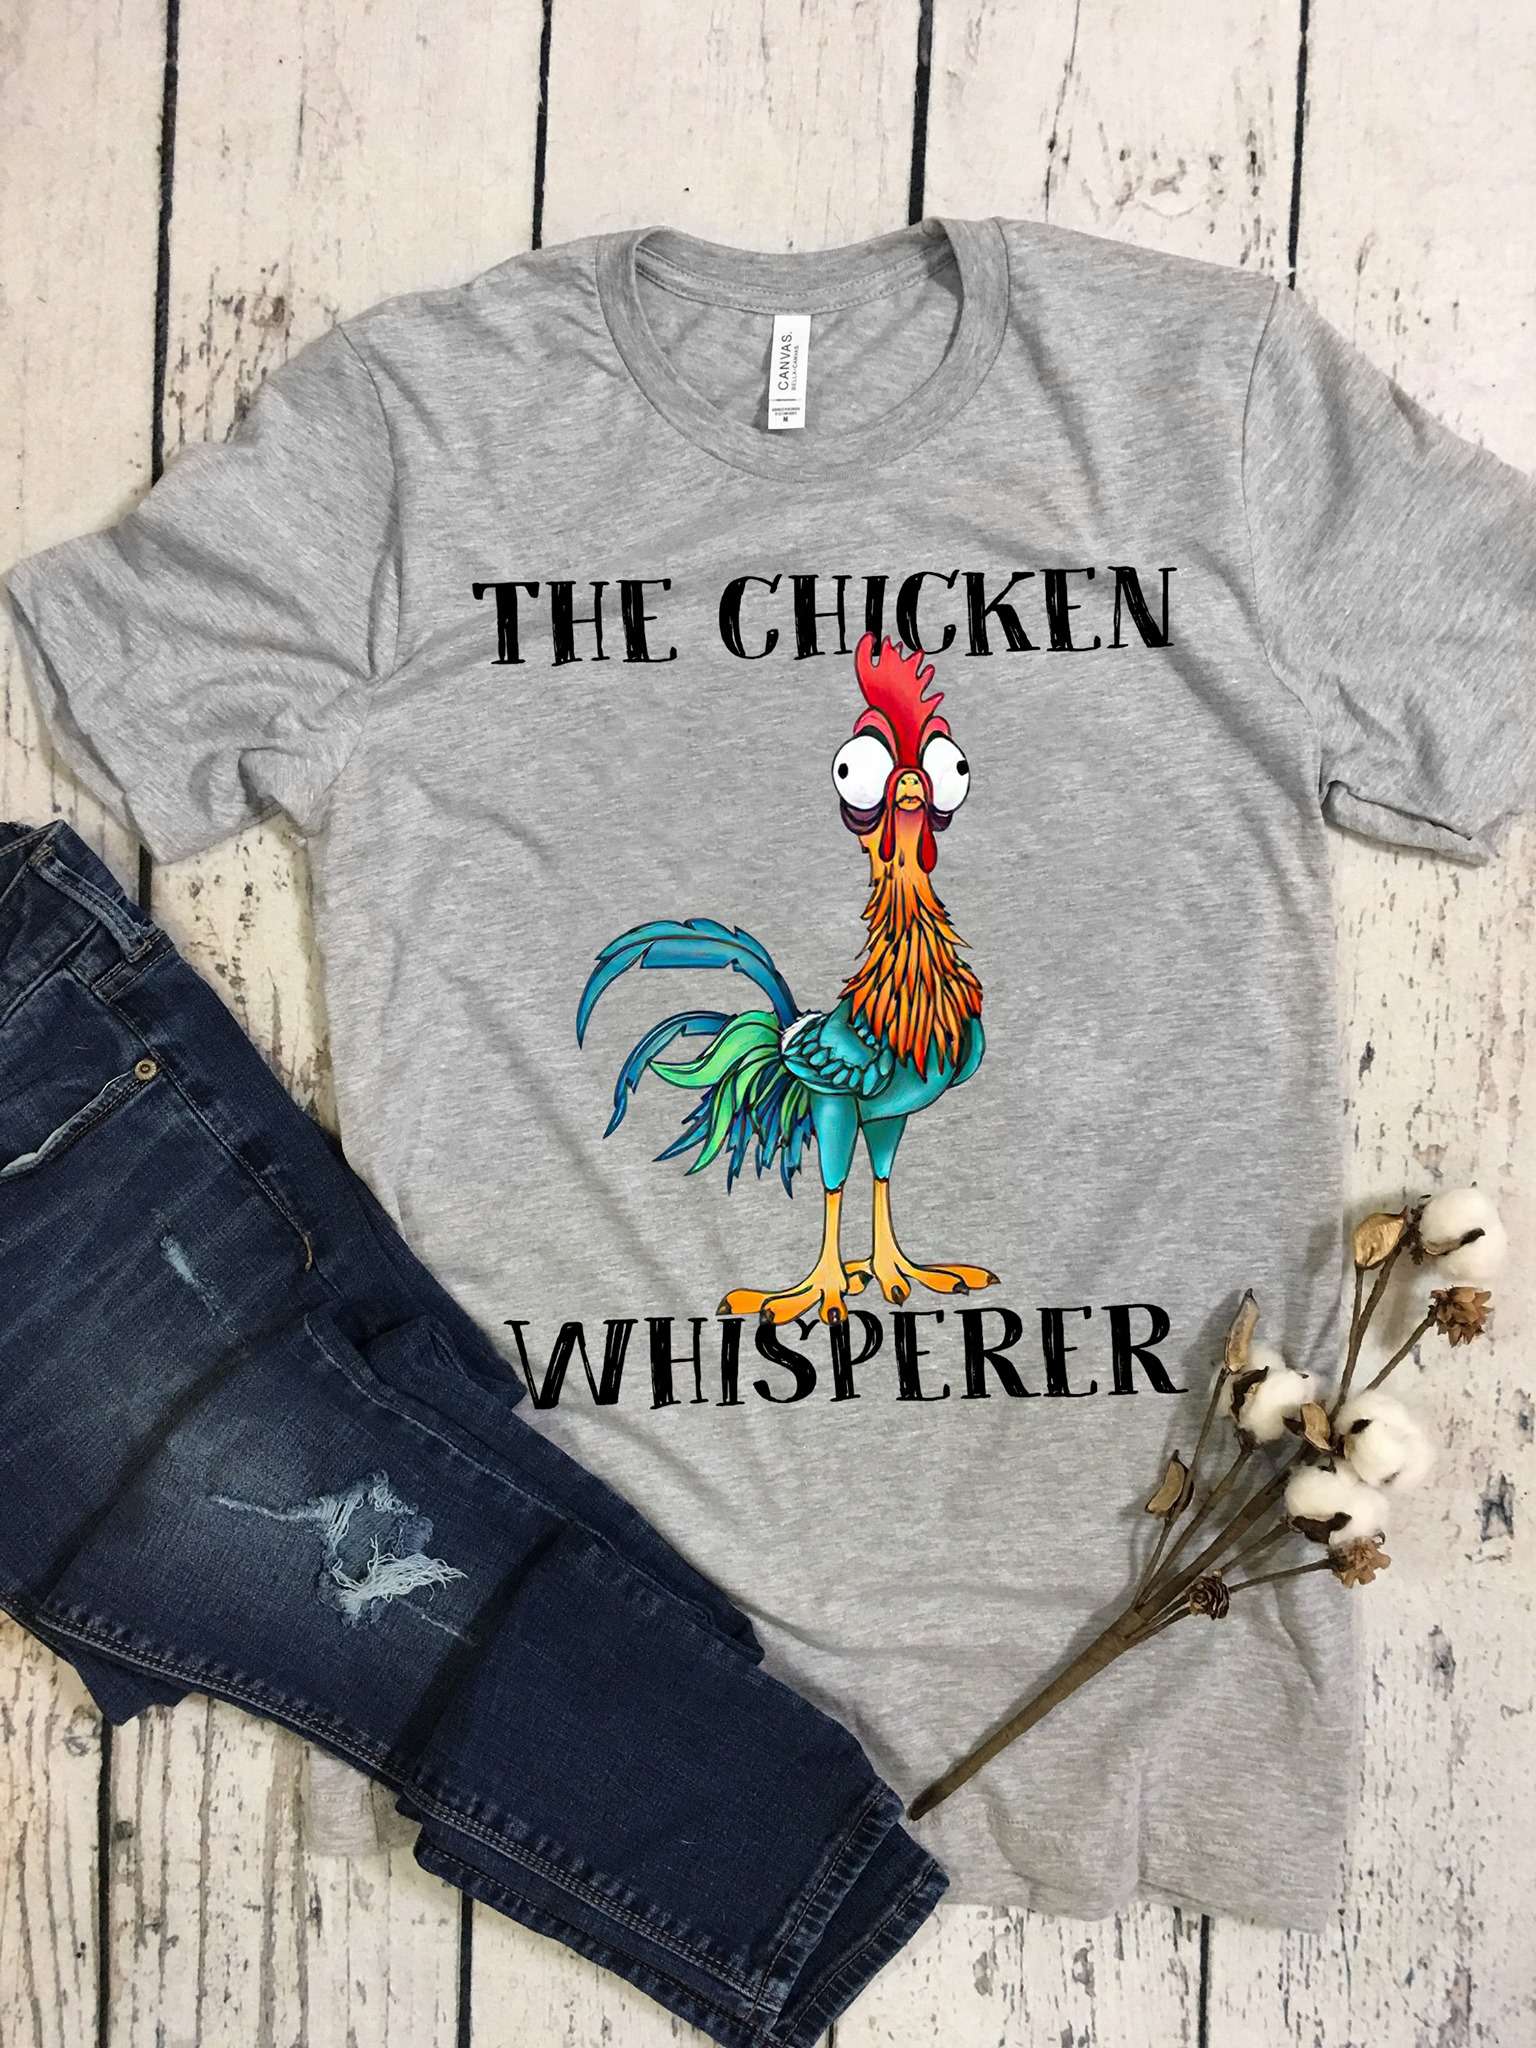 The chicken whisperer - Cranky chicken, chicken animal lover